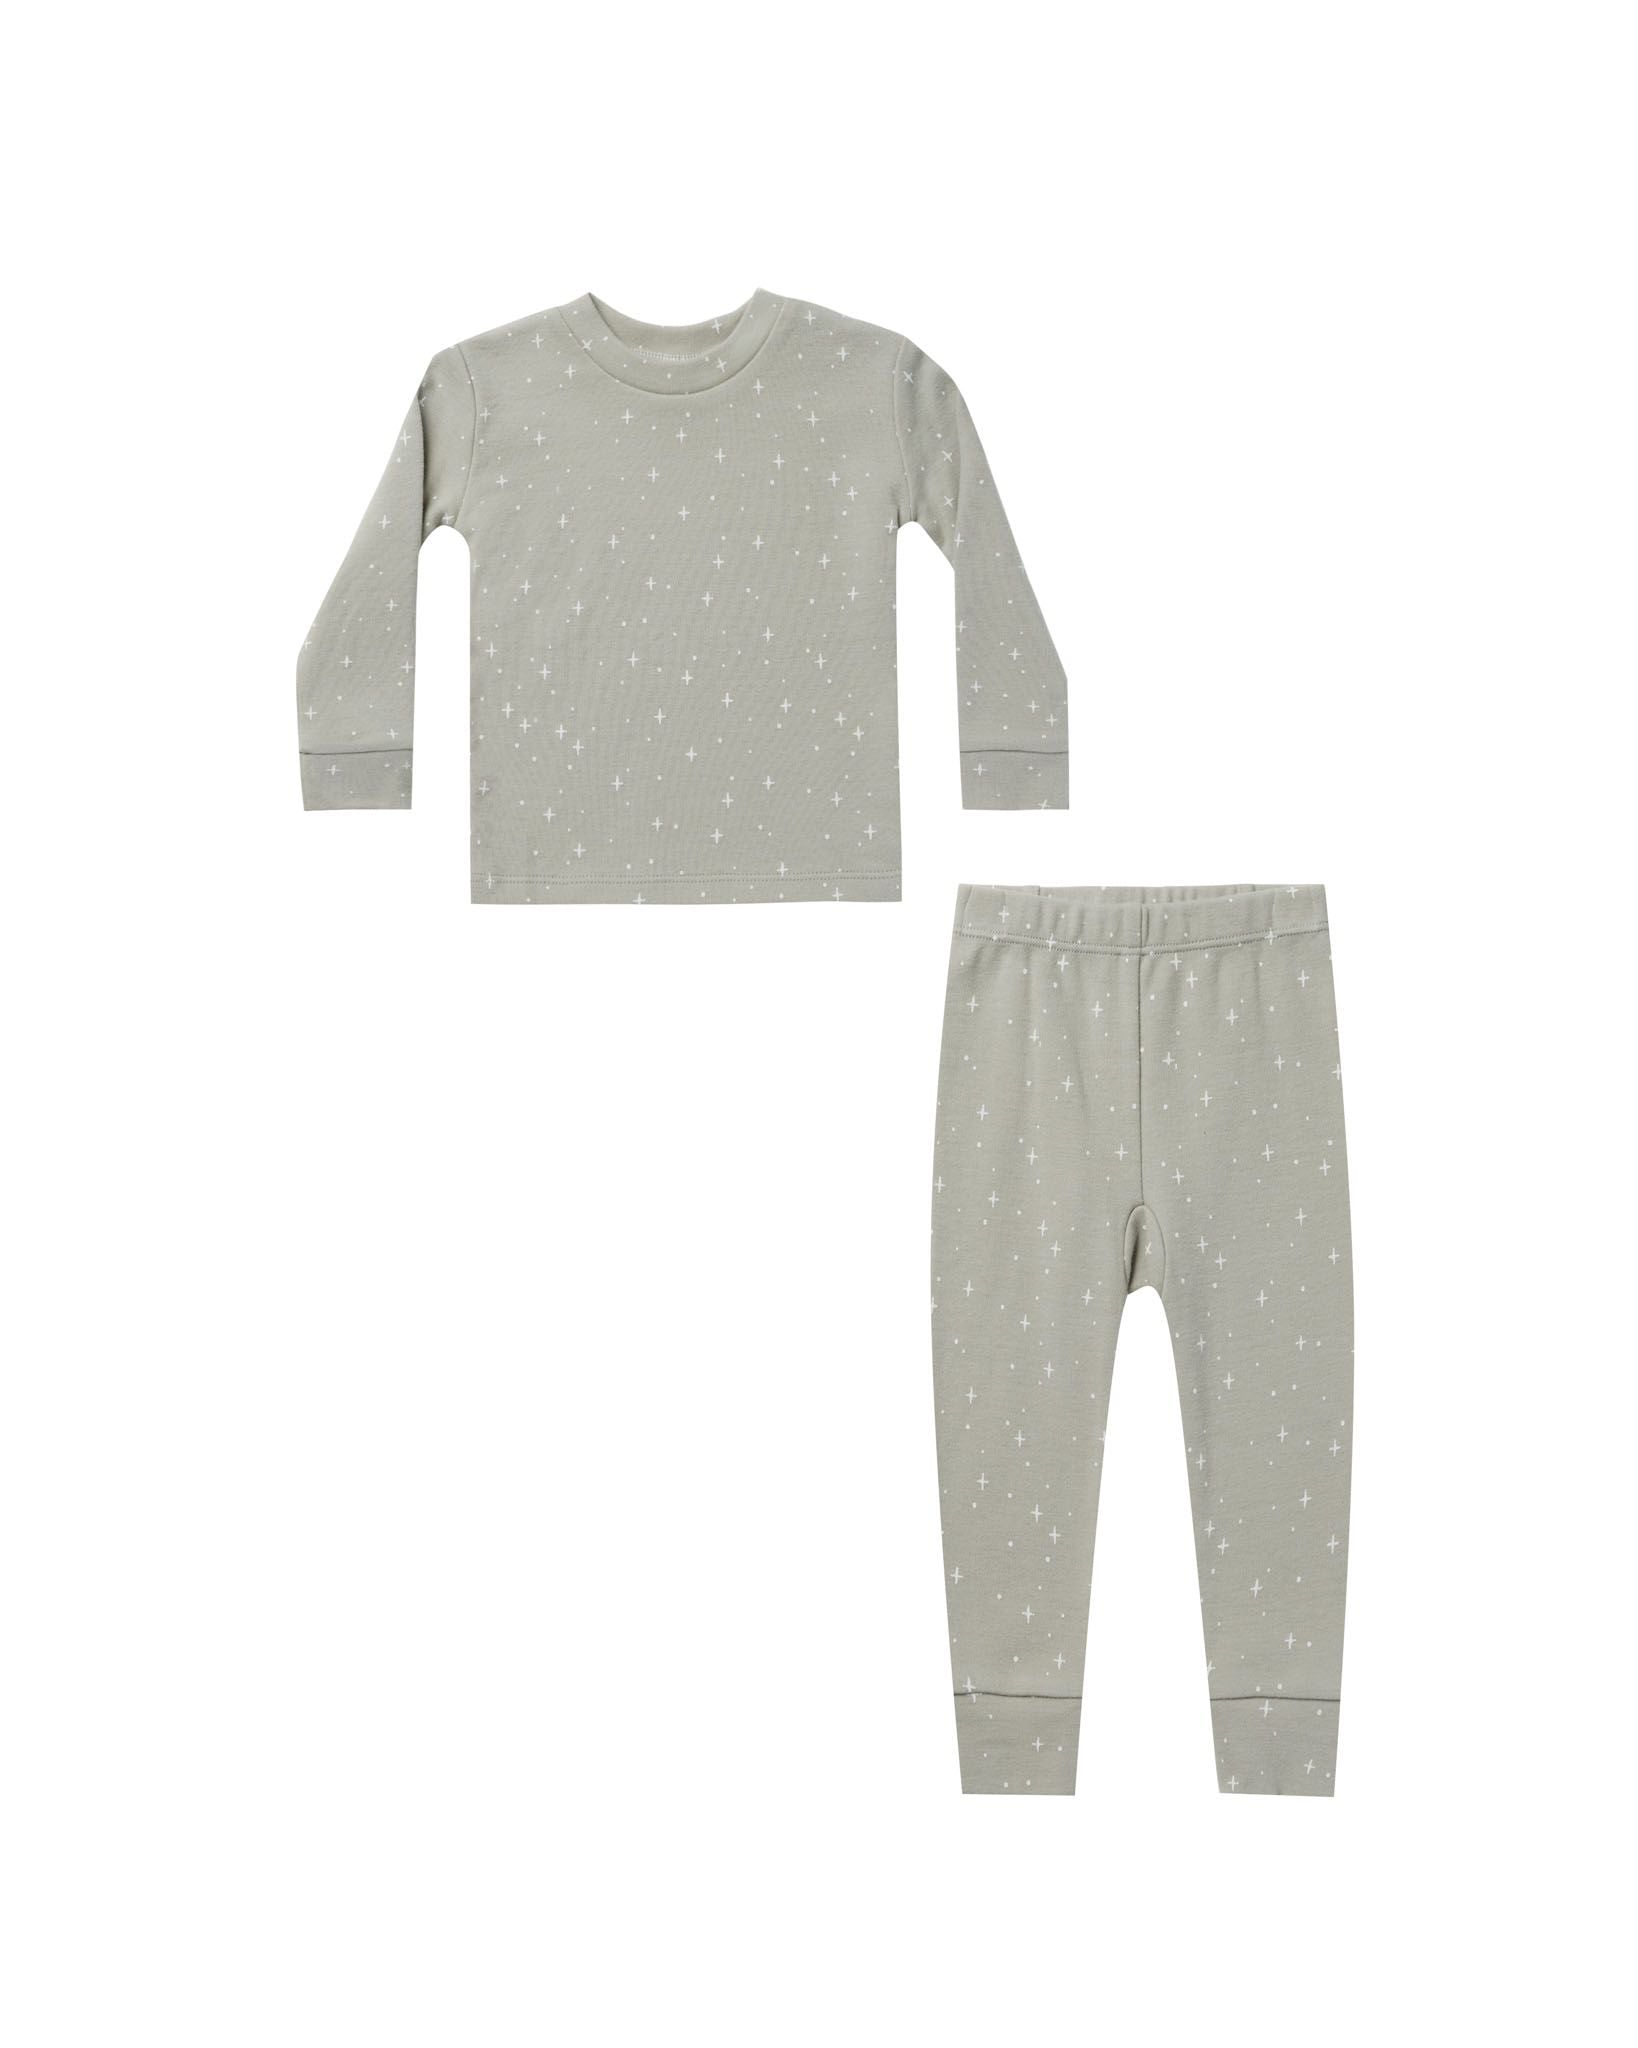 Organic Pajama Set - Twinkle